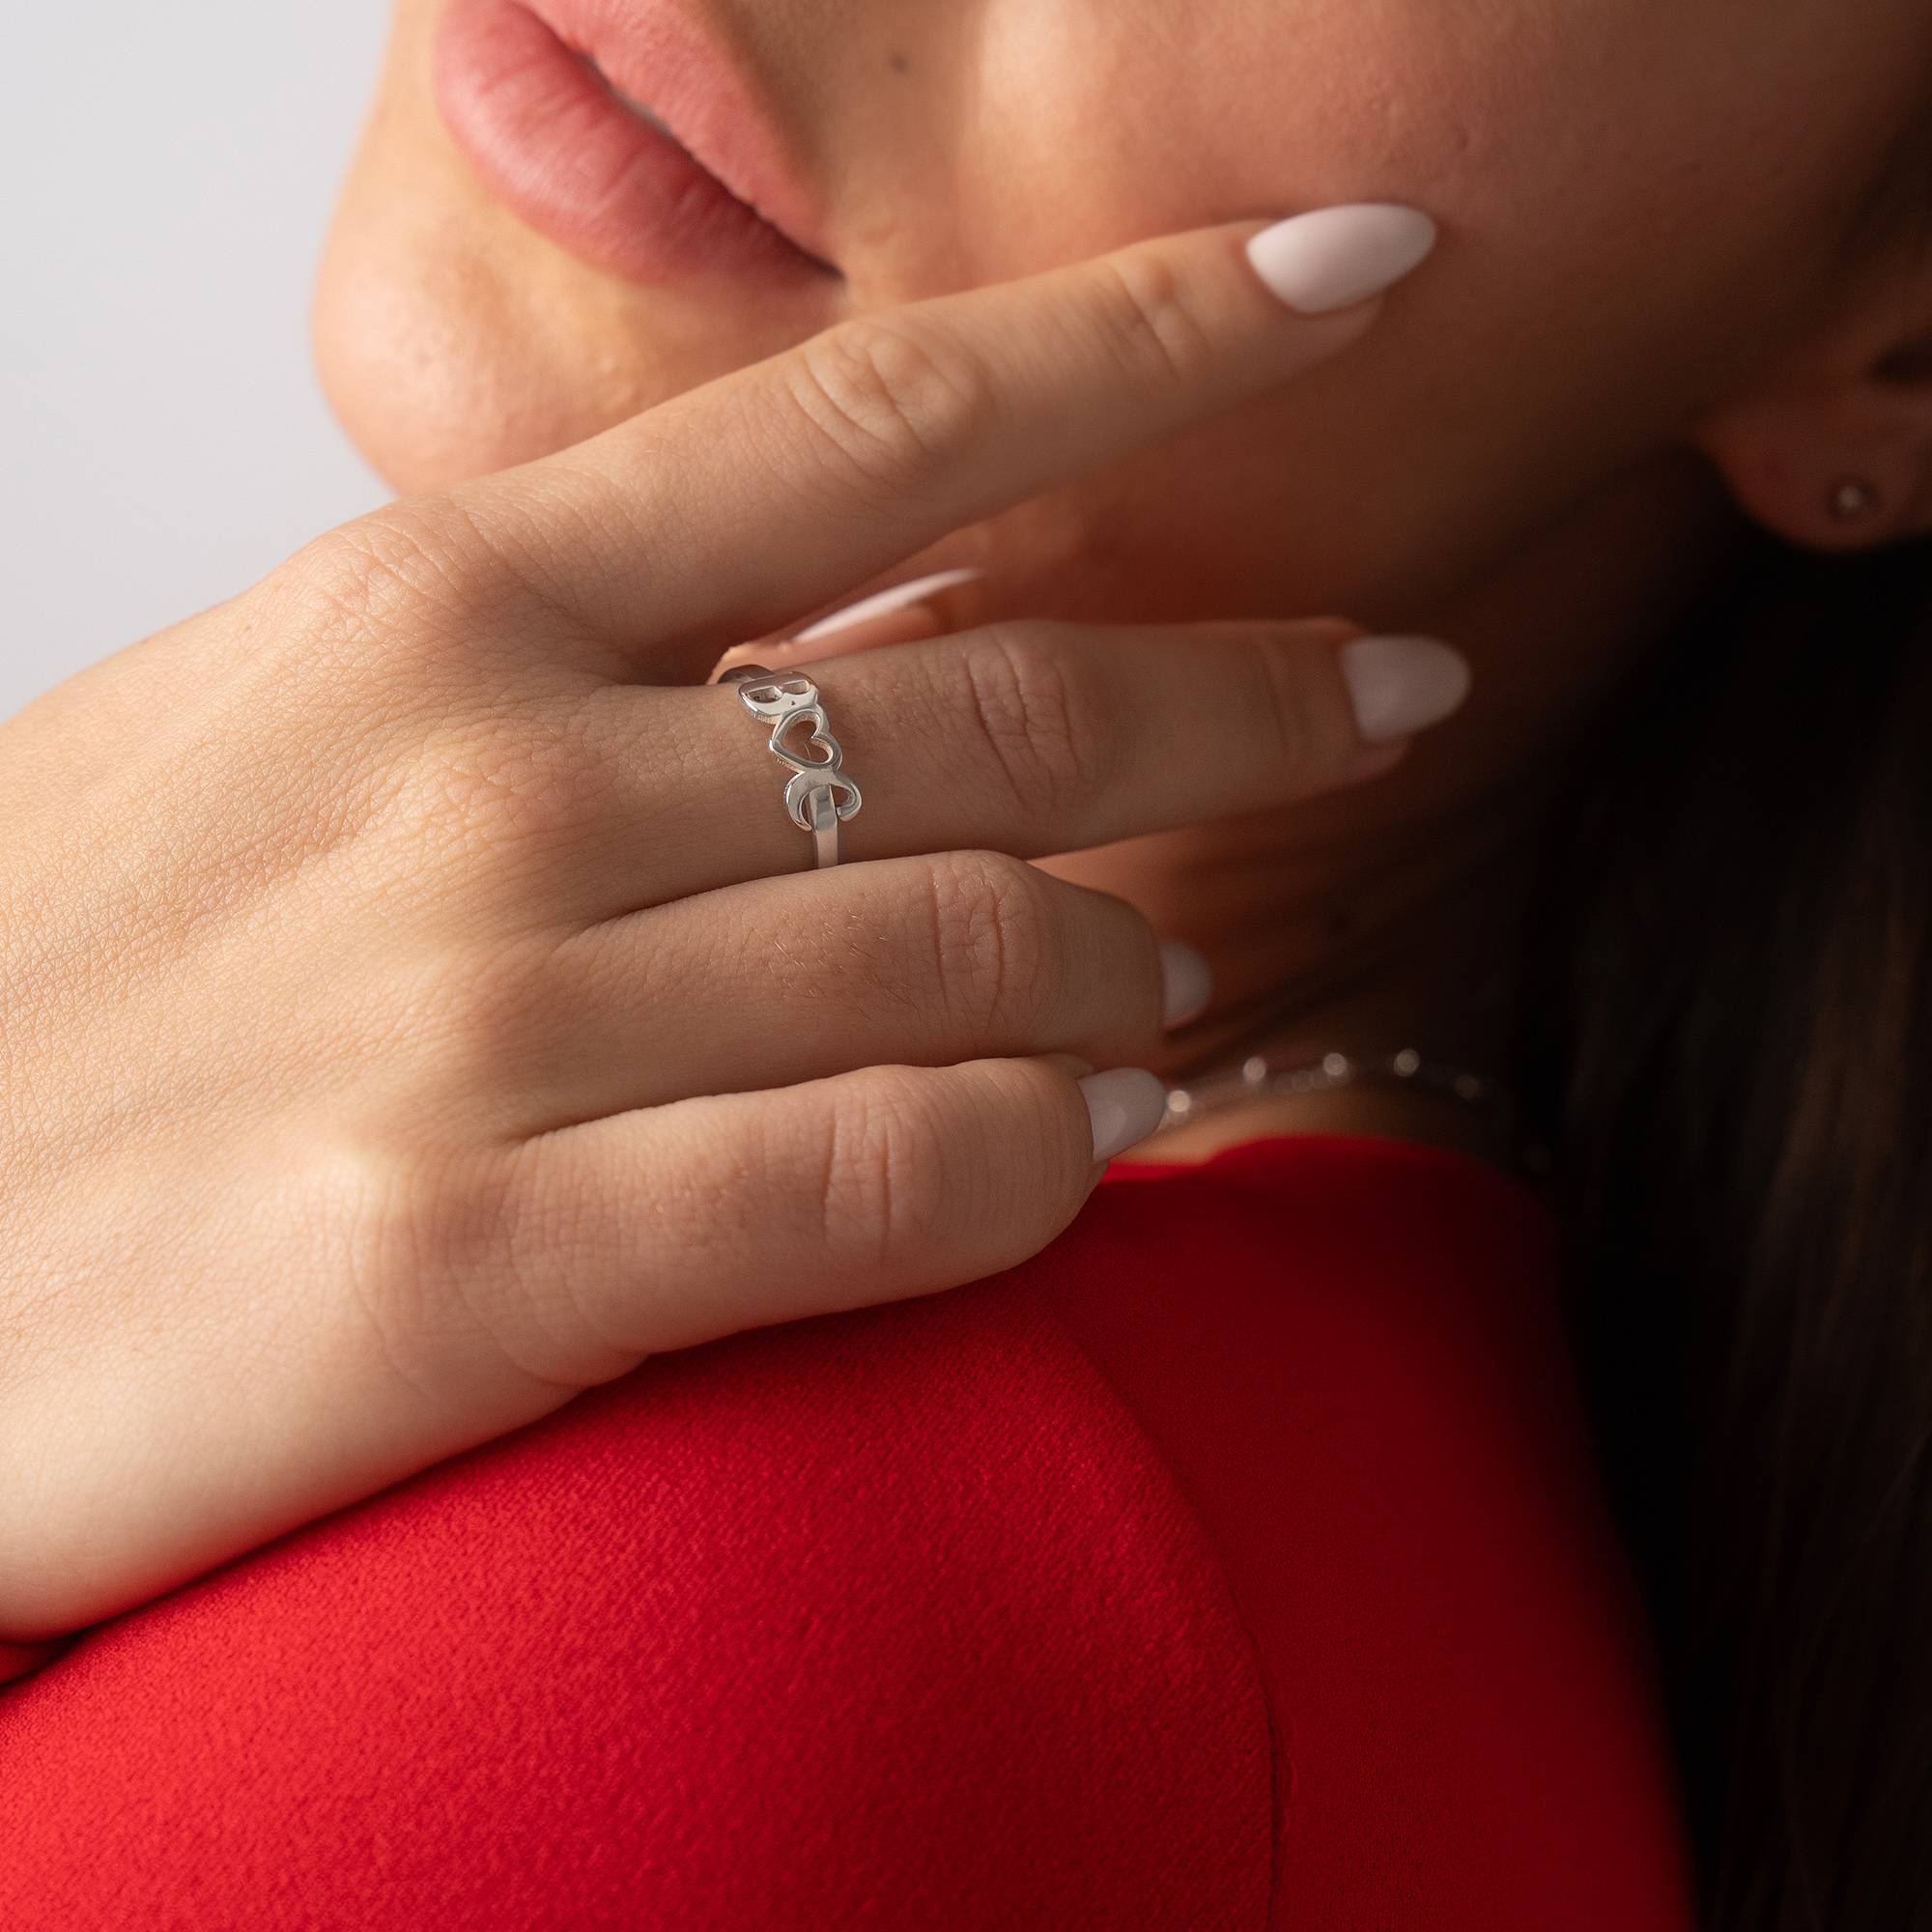 Ik Hou van Jou Initialen Ring in Sterling Zilver-3 Productfoto